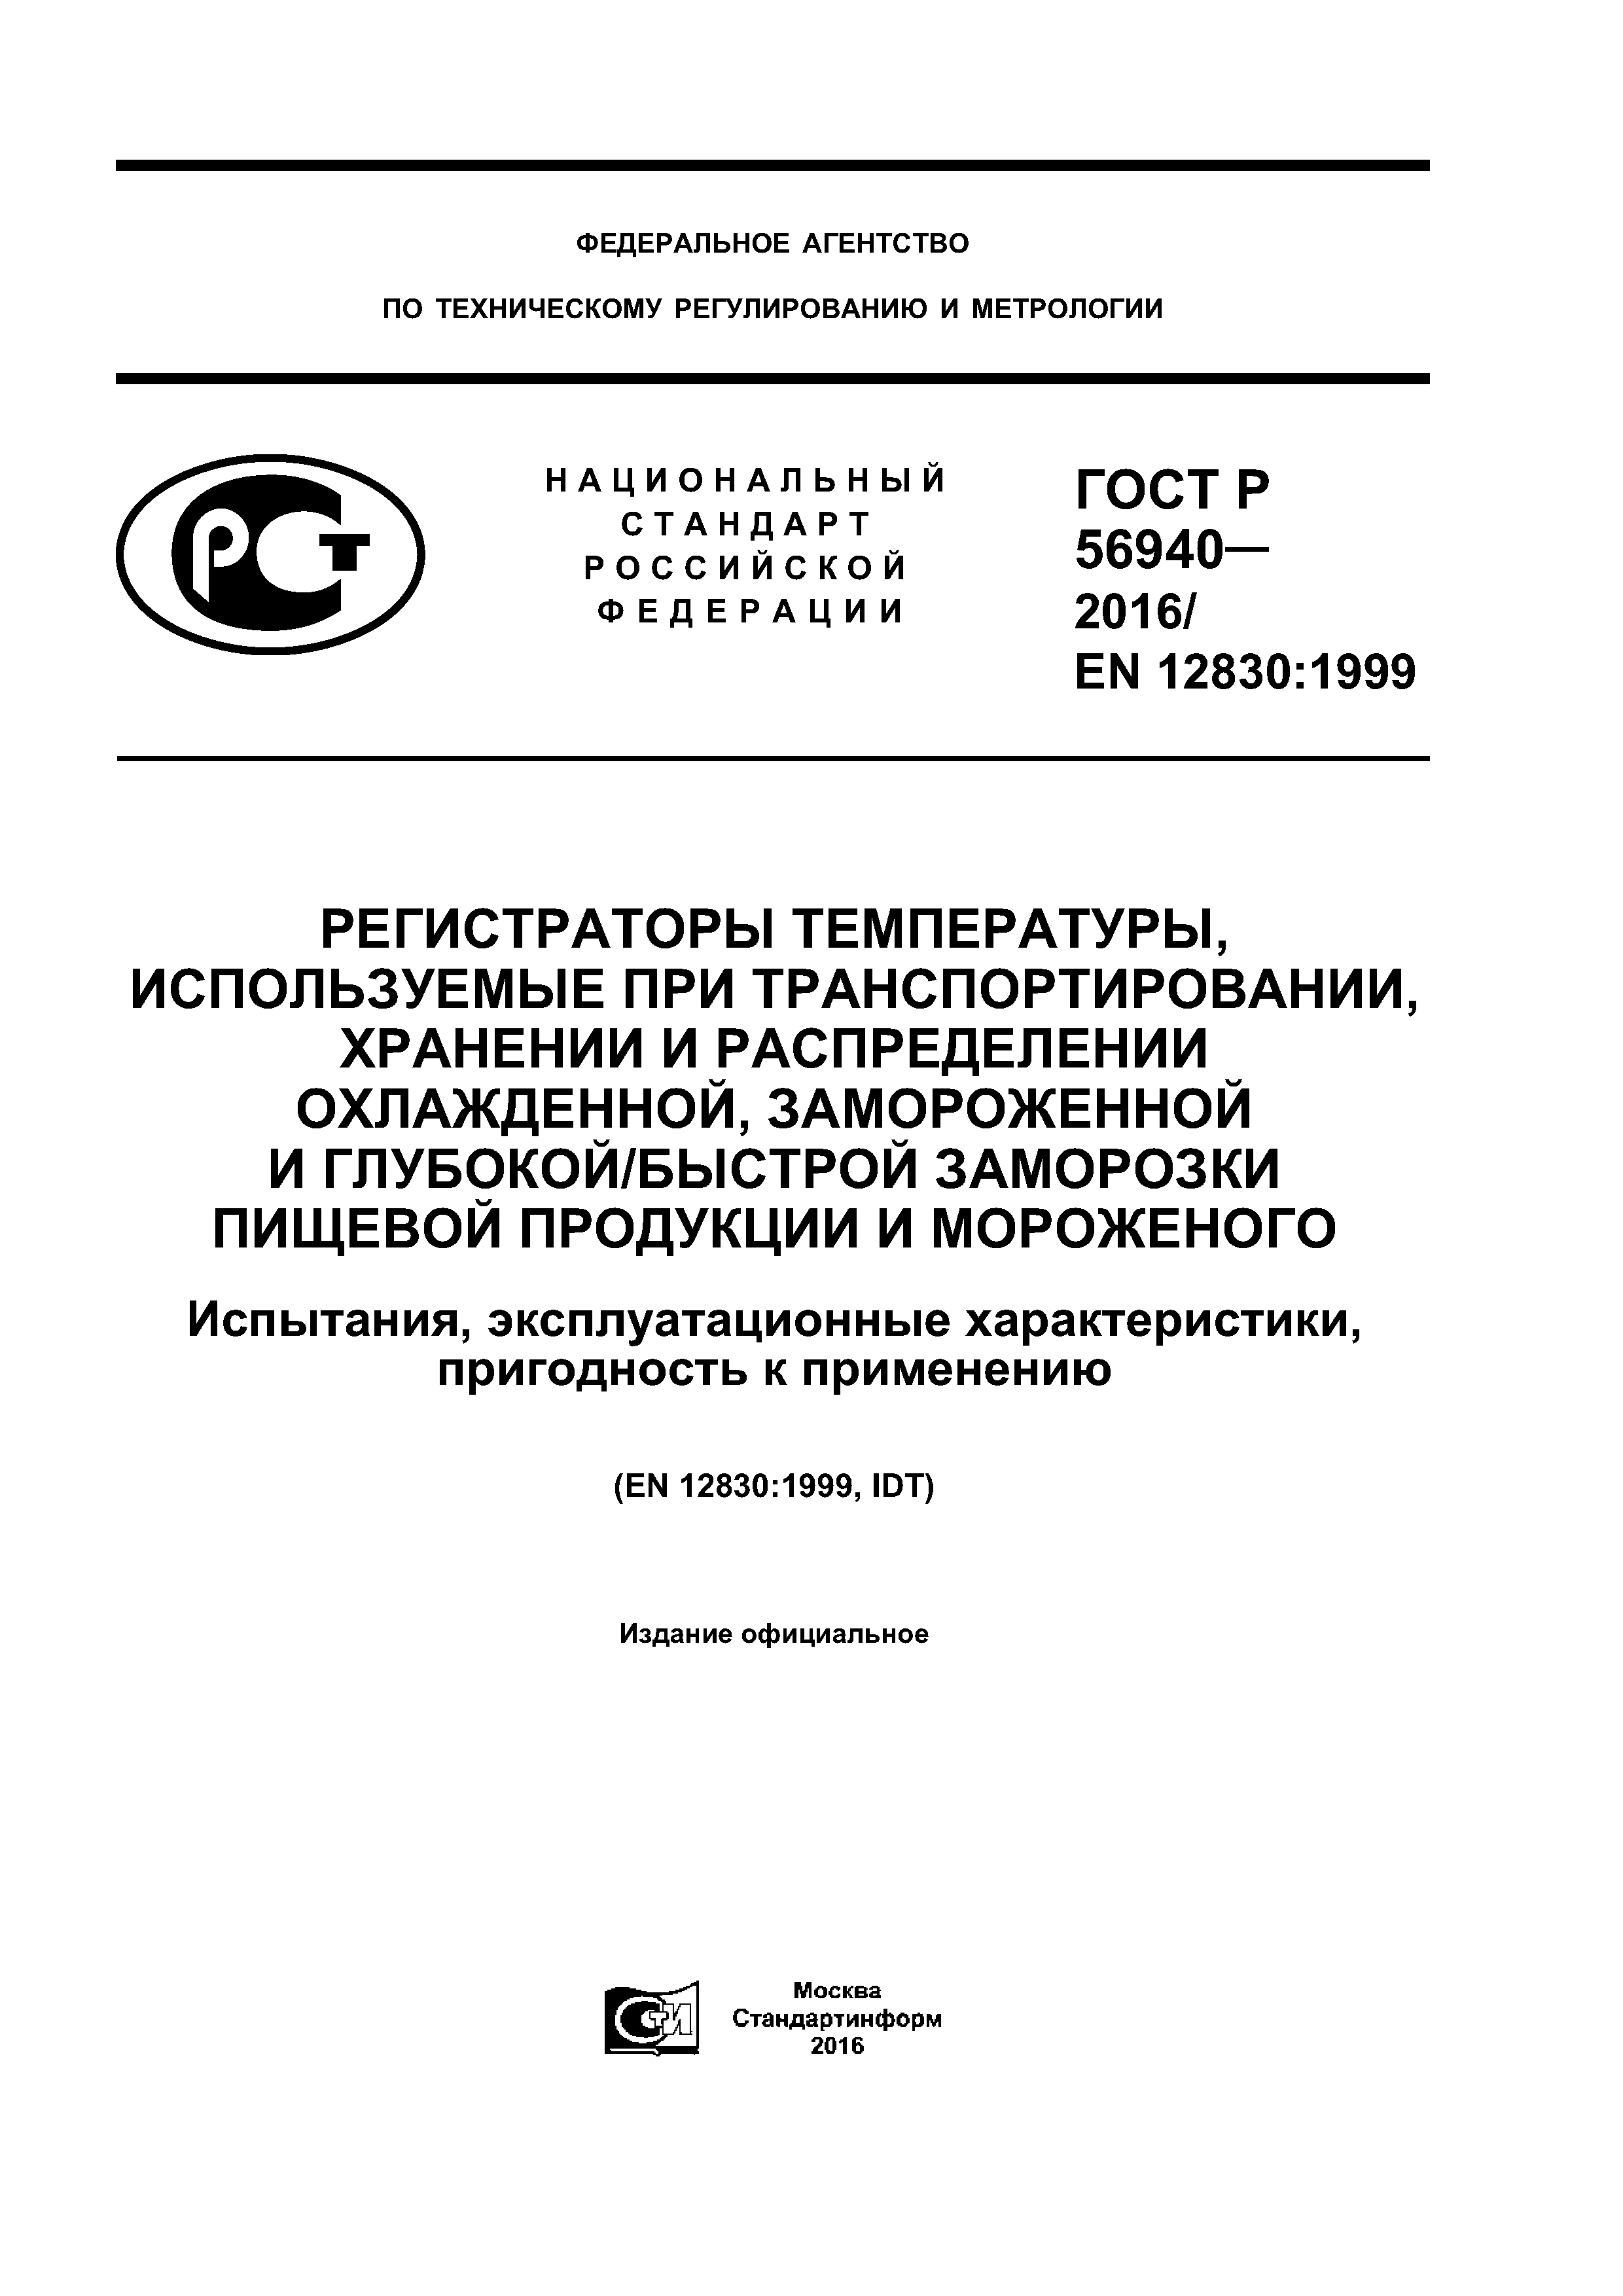 ГОСТ Р 56940-2016